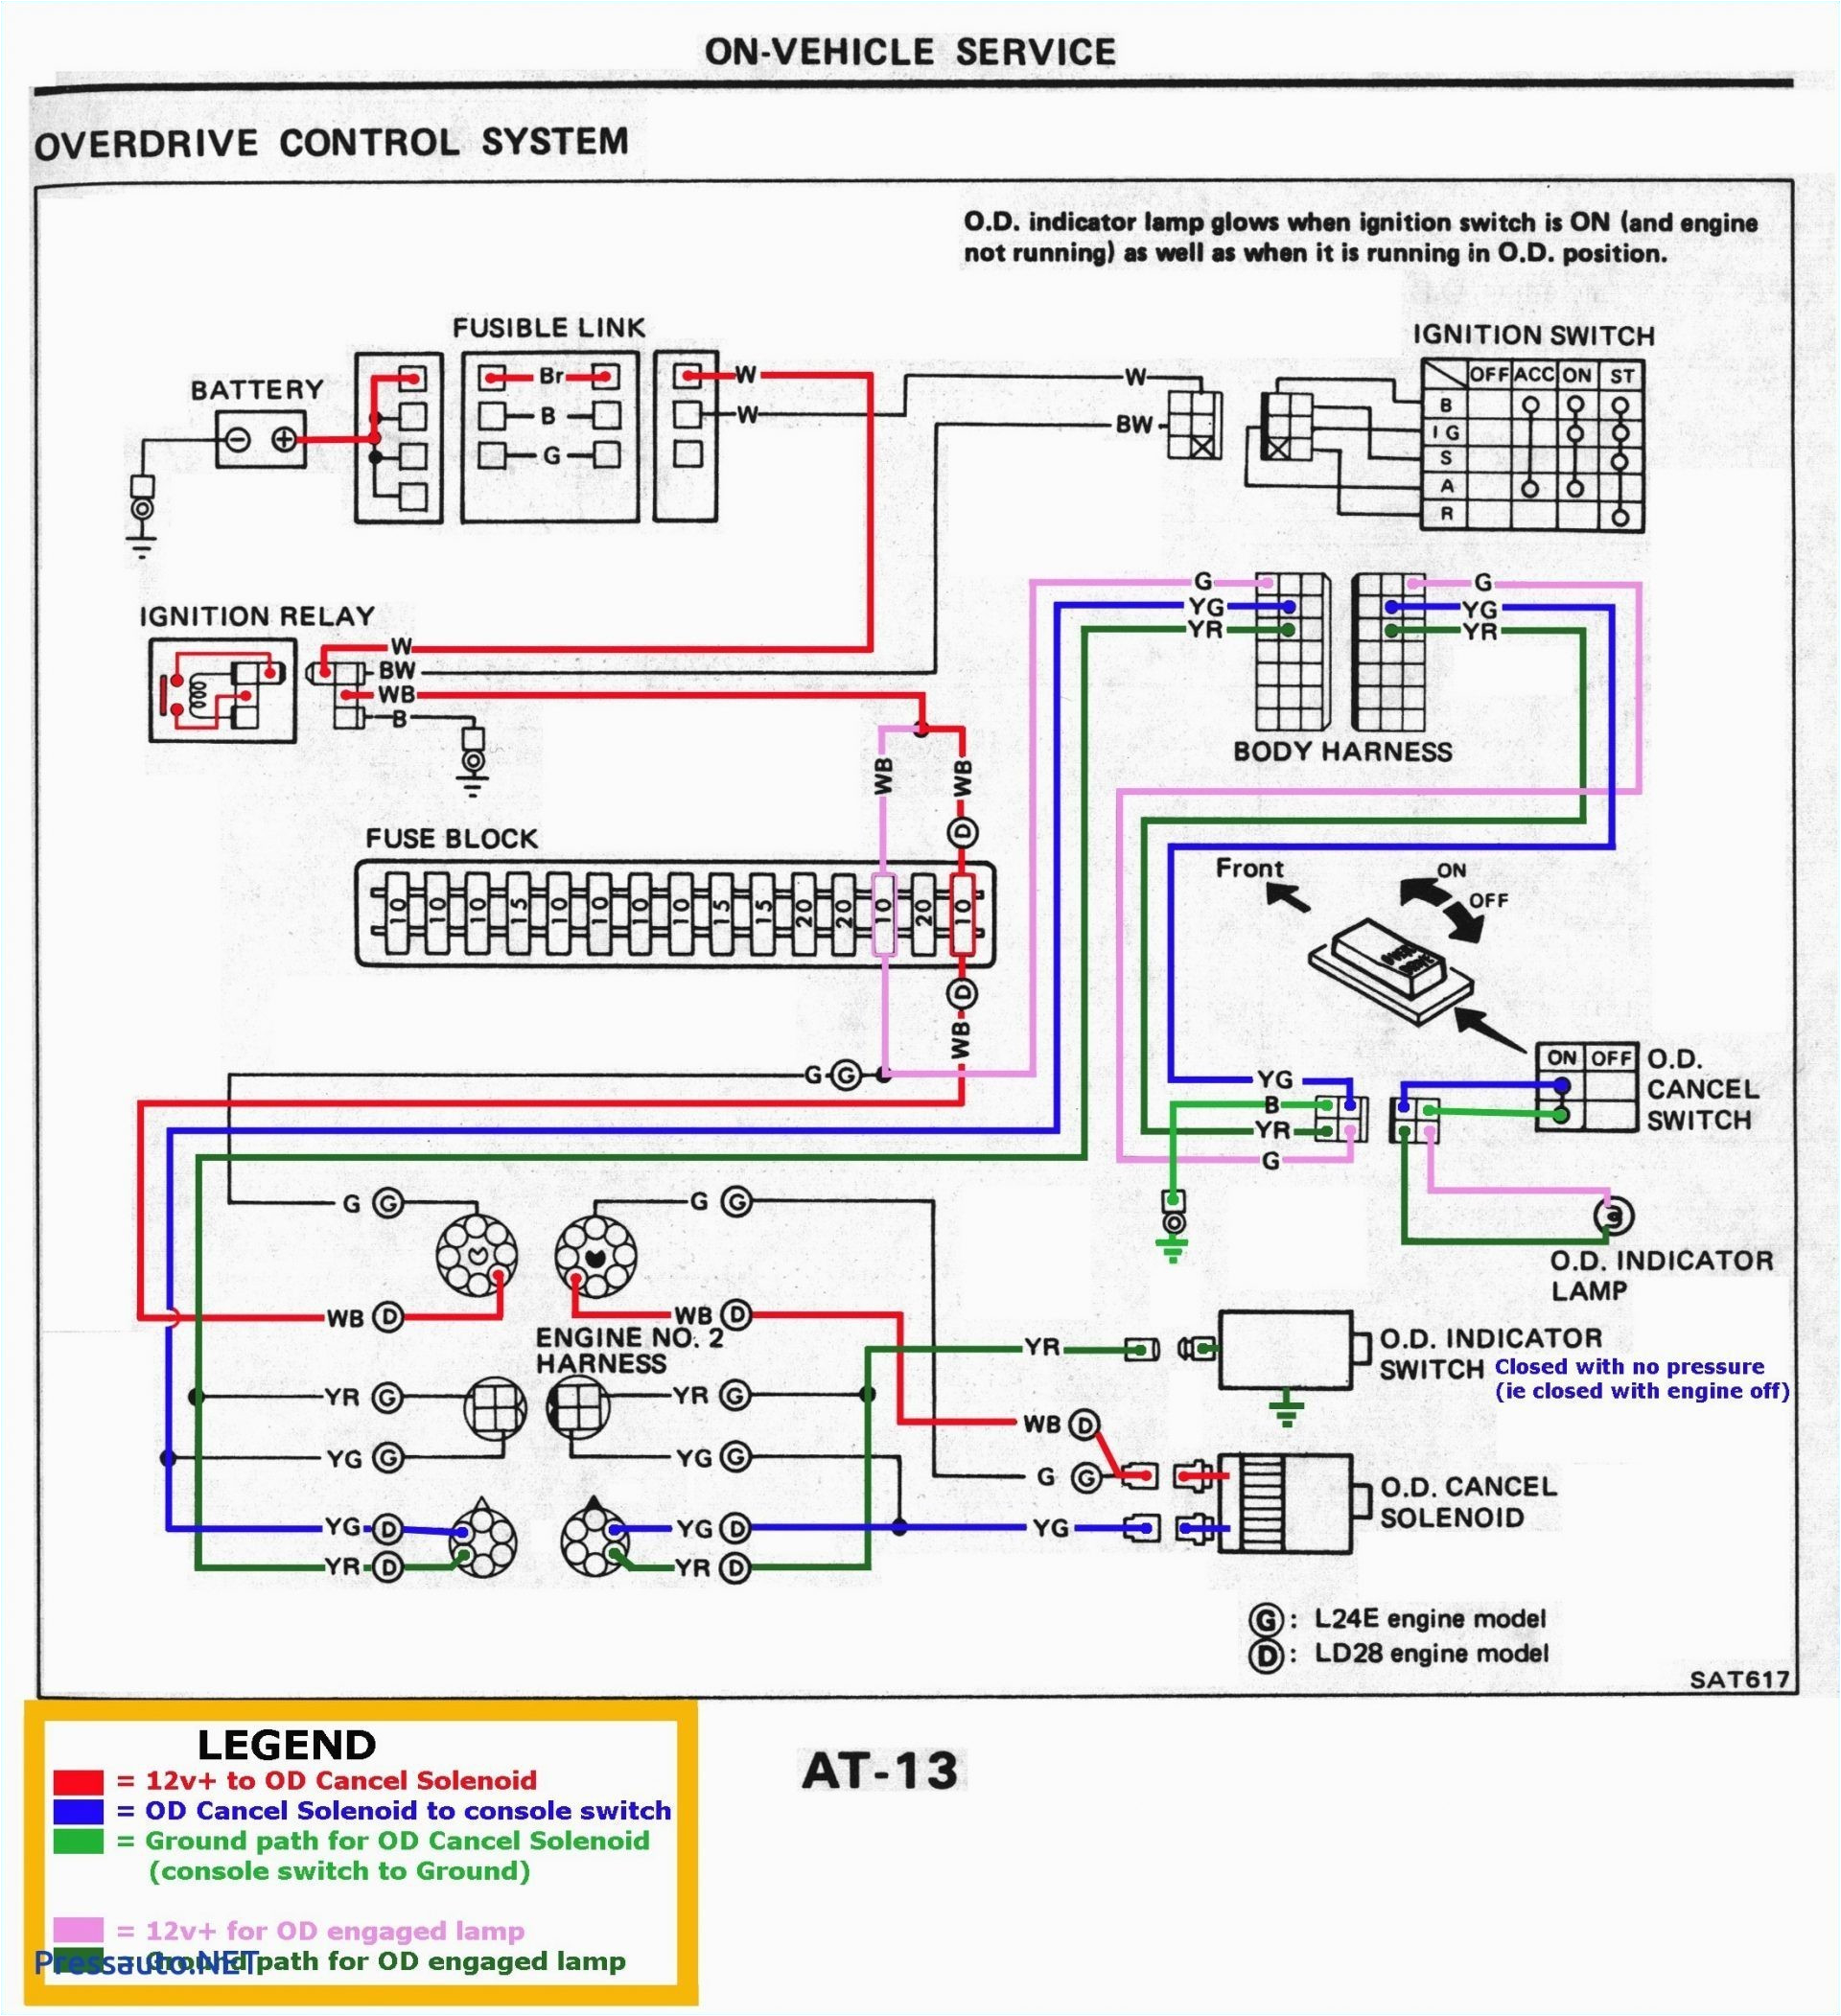 lighting wire diagram 110 wiring diagram operations light wiring diagram 110 wiring diagram lighting wire diagram